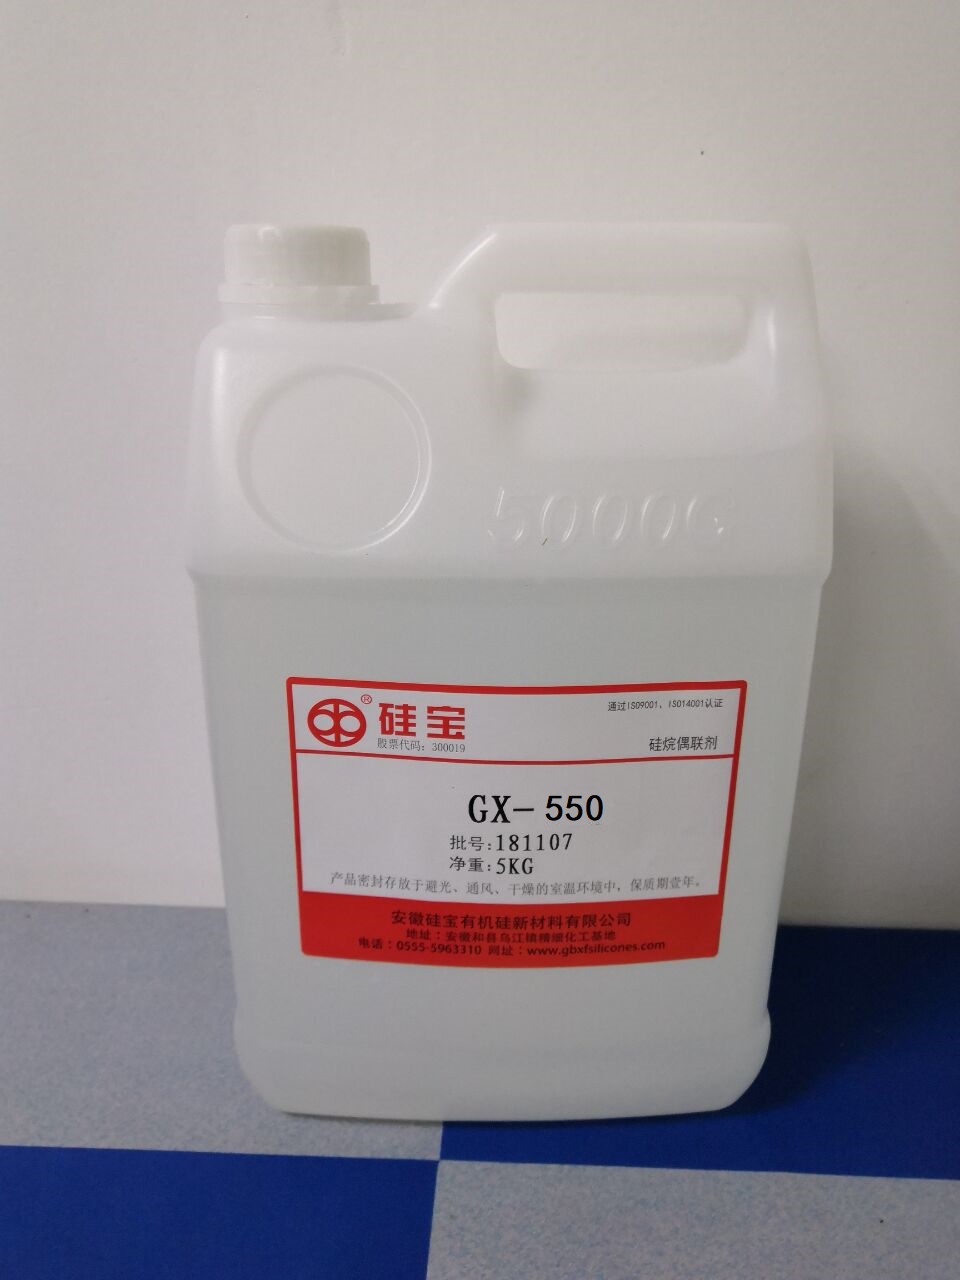 GX-550アミノシランカップリング剤